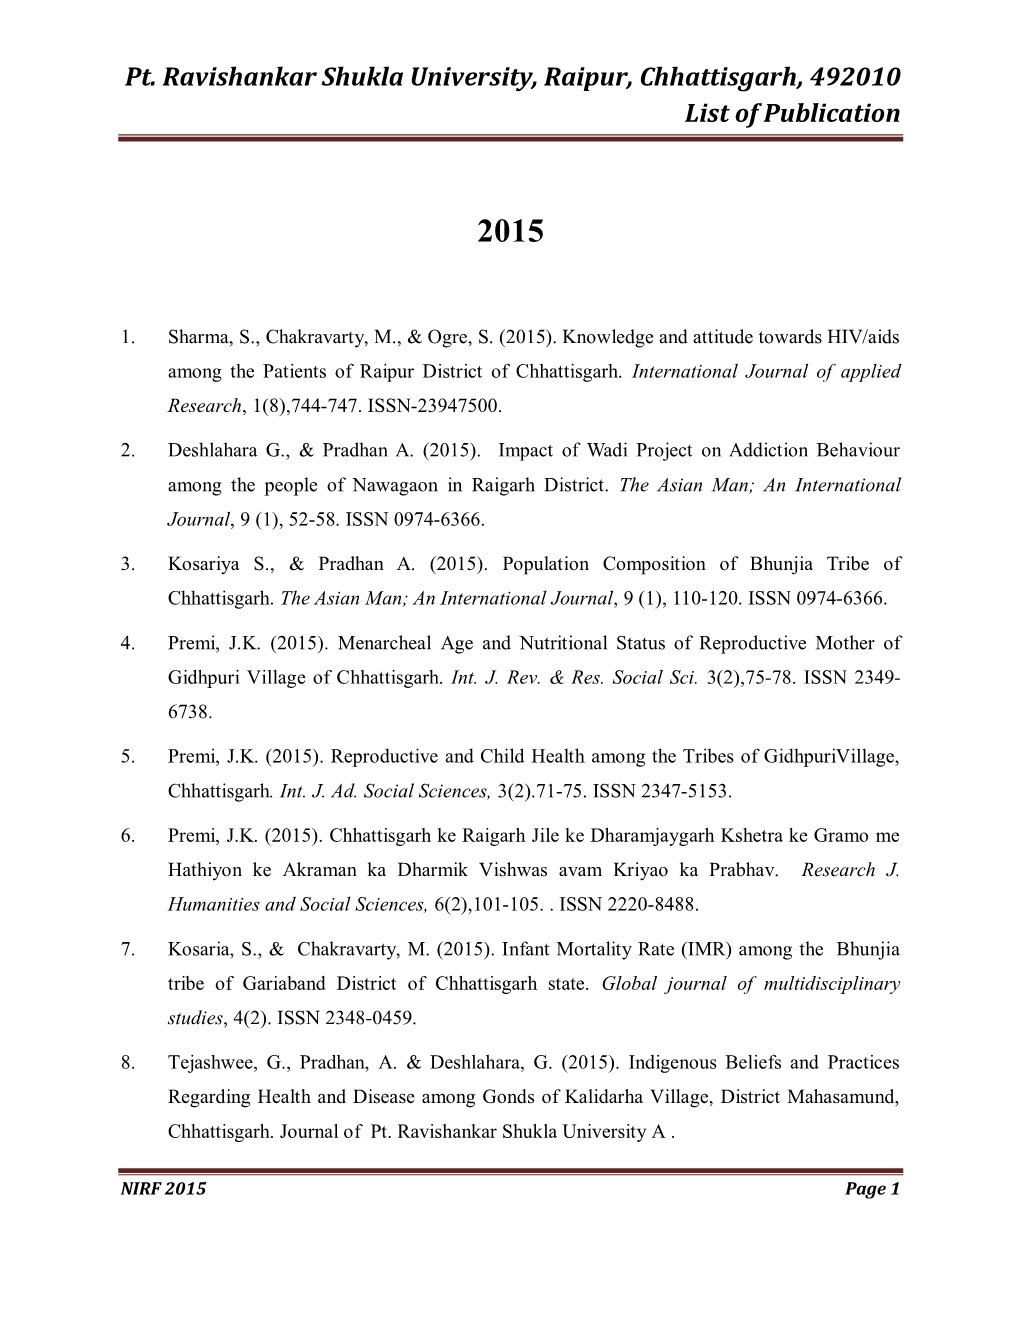 Pt. Ravishankar Shukla University, Raipur, Chhattisgarh, 492010 List of Publication